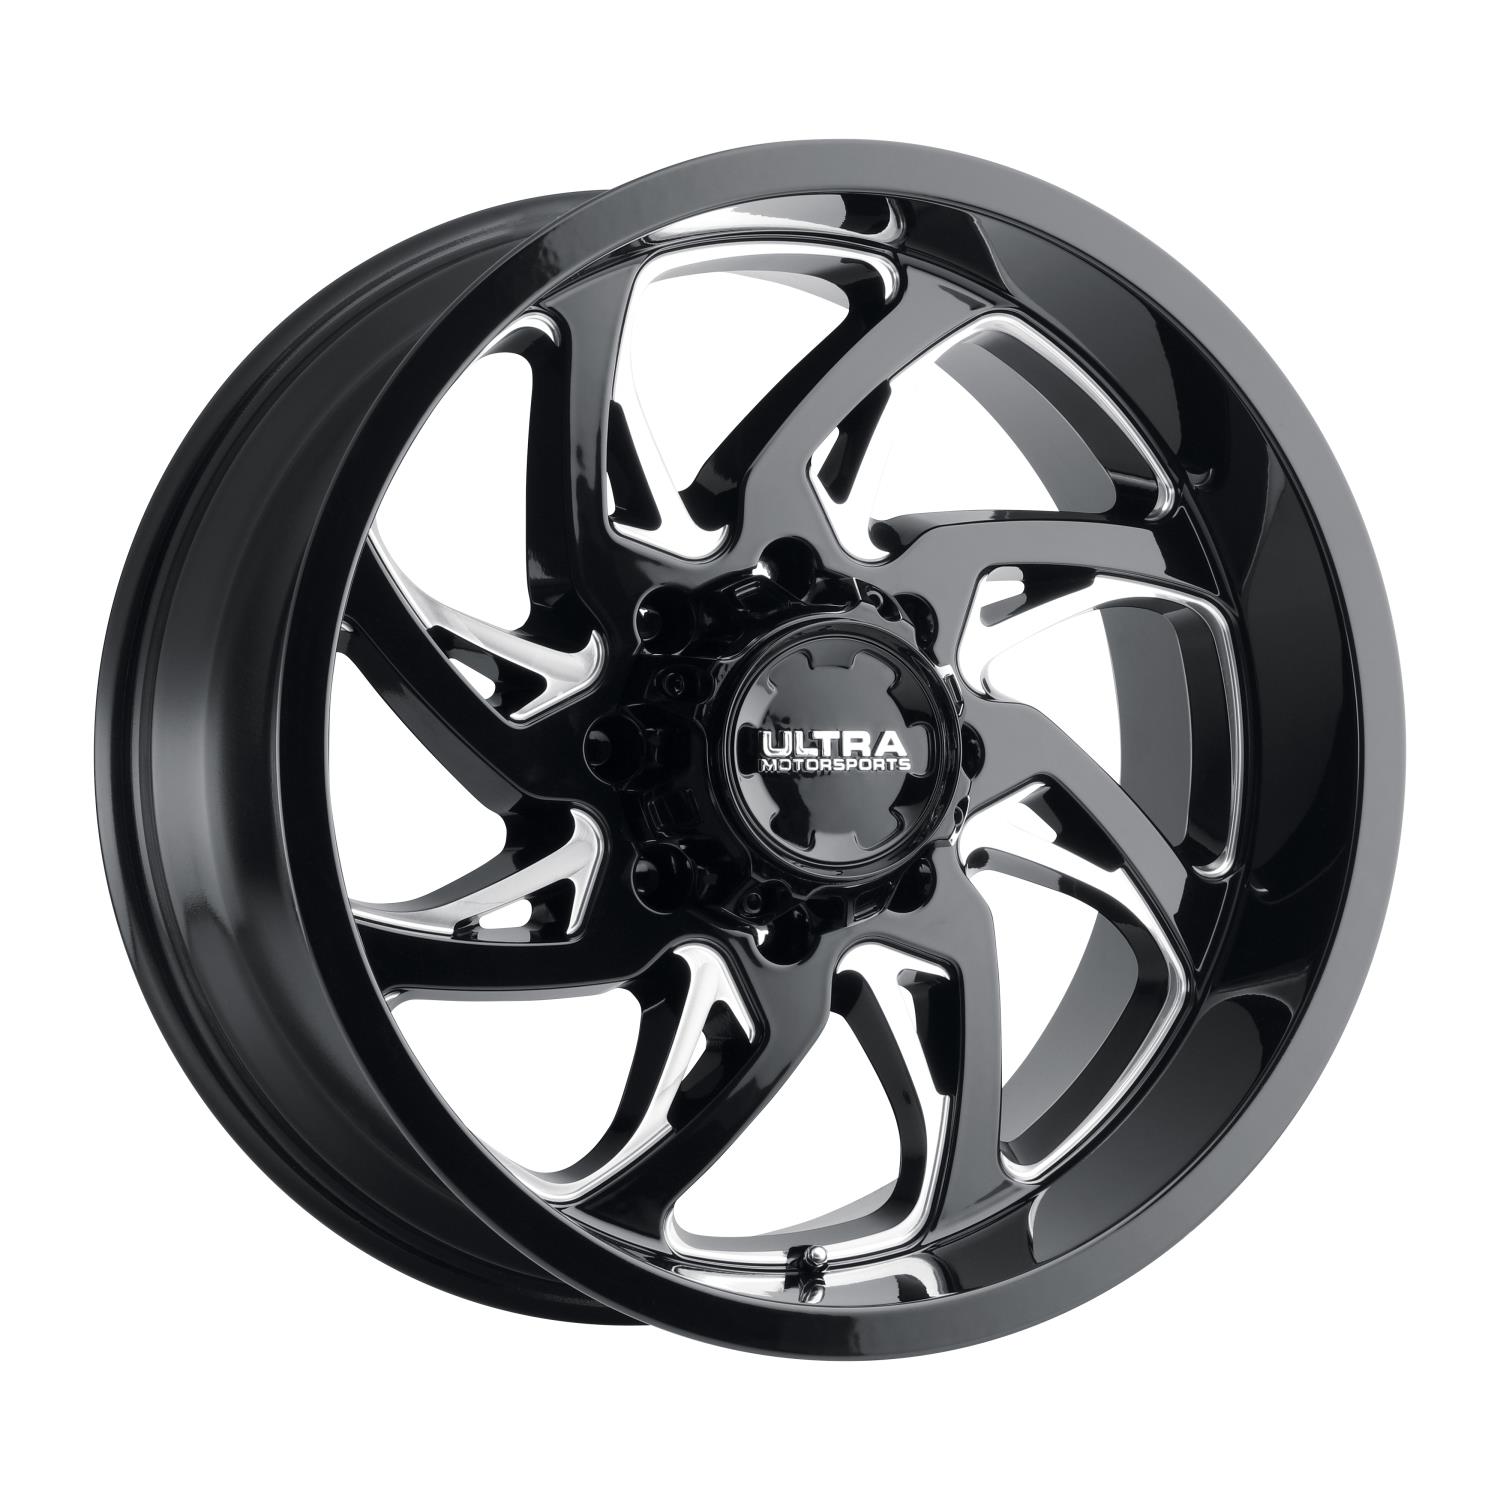 230-Series Villain Wheel, Size: 18x9", Bolt Pattern: 8x6.5" [Gloss Black w/Milled Accents]